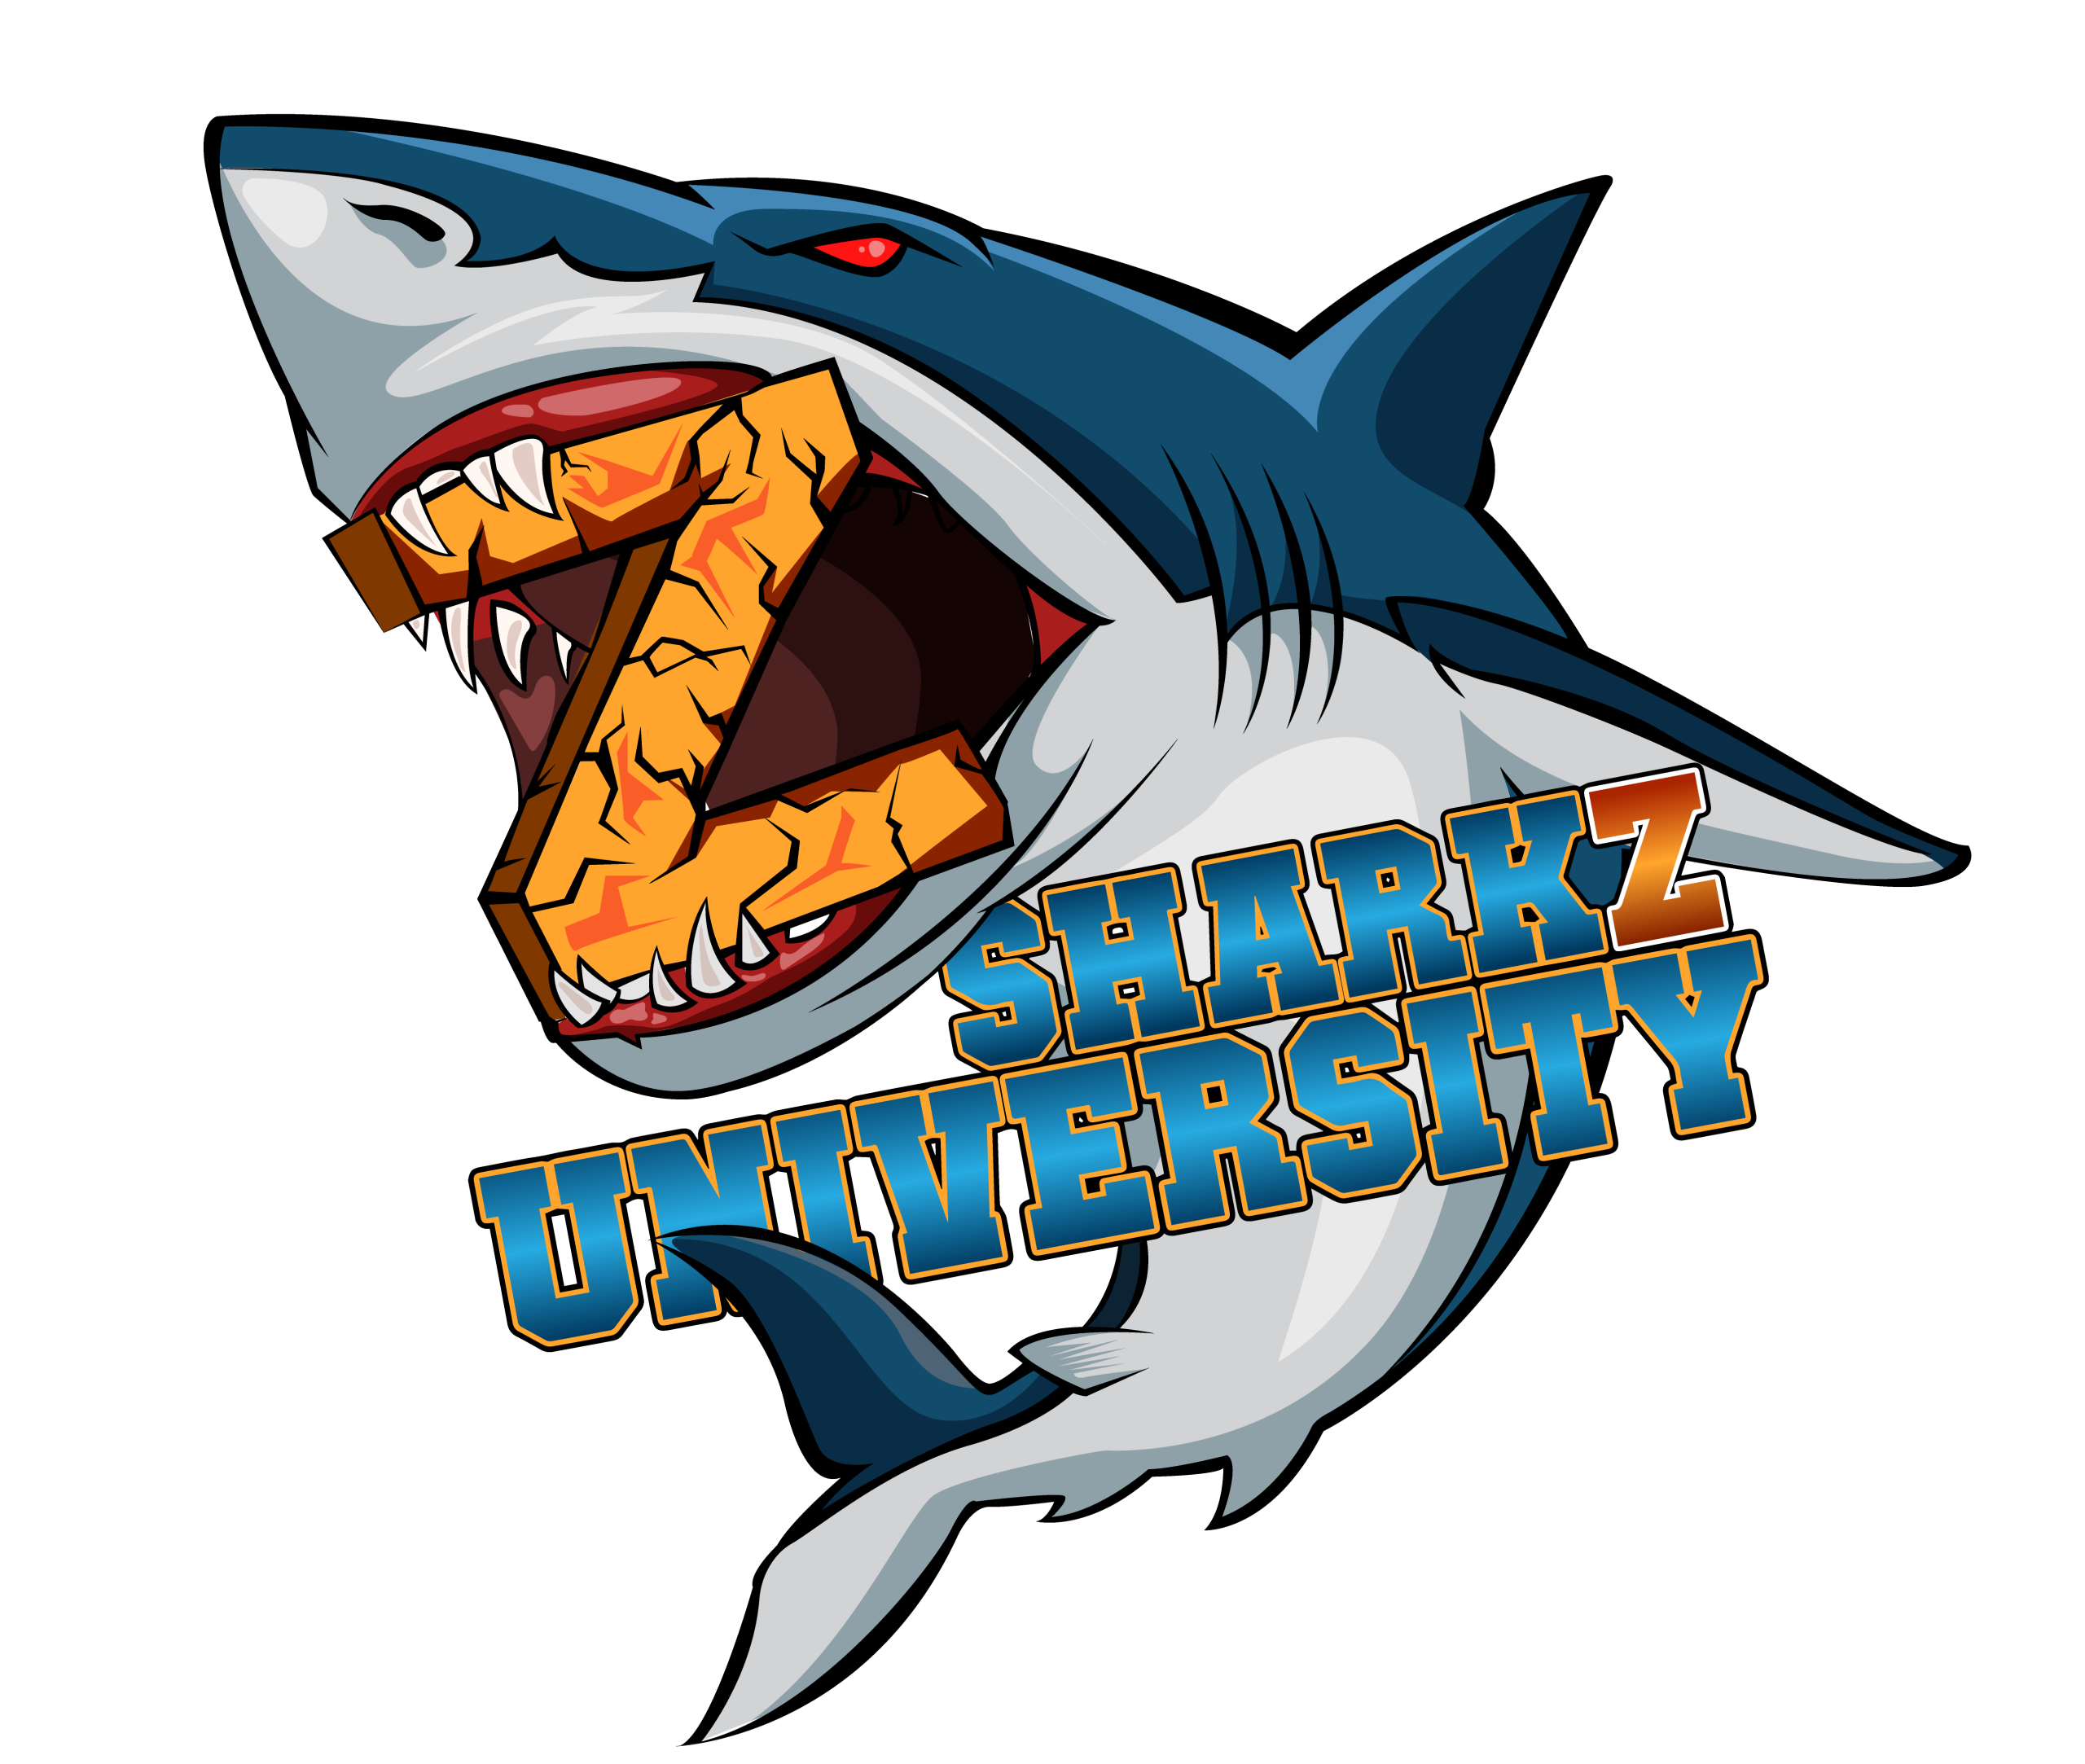 Sharkz university